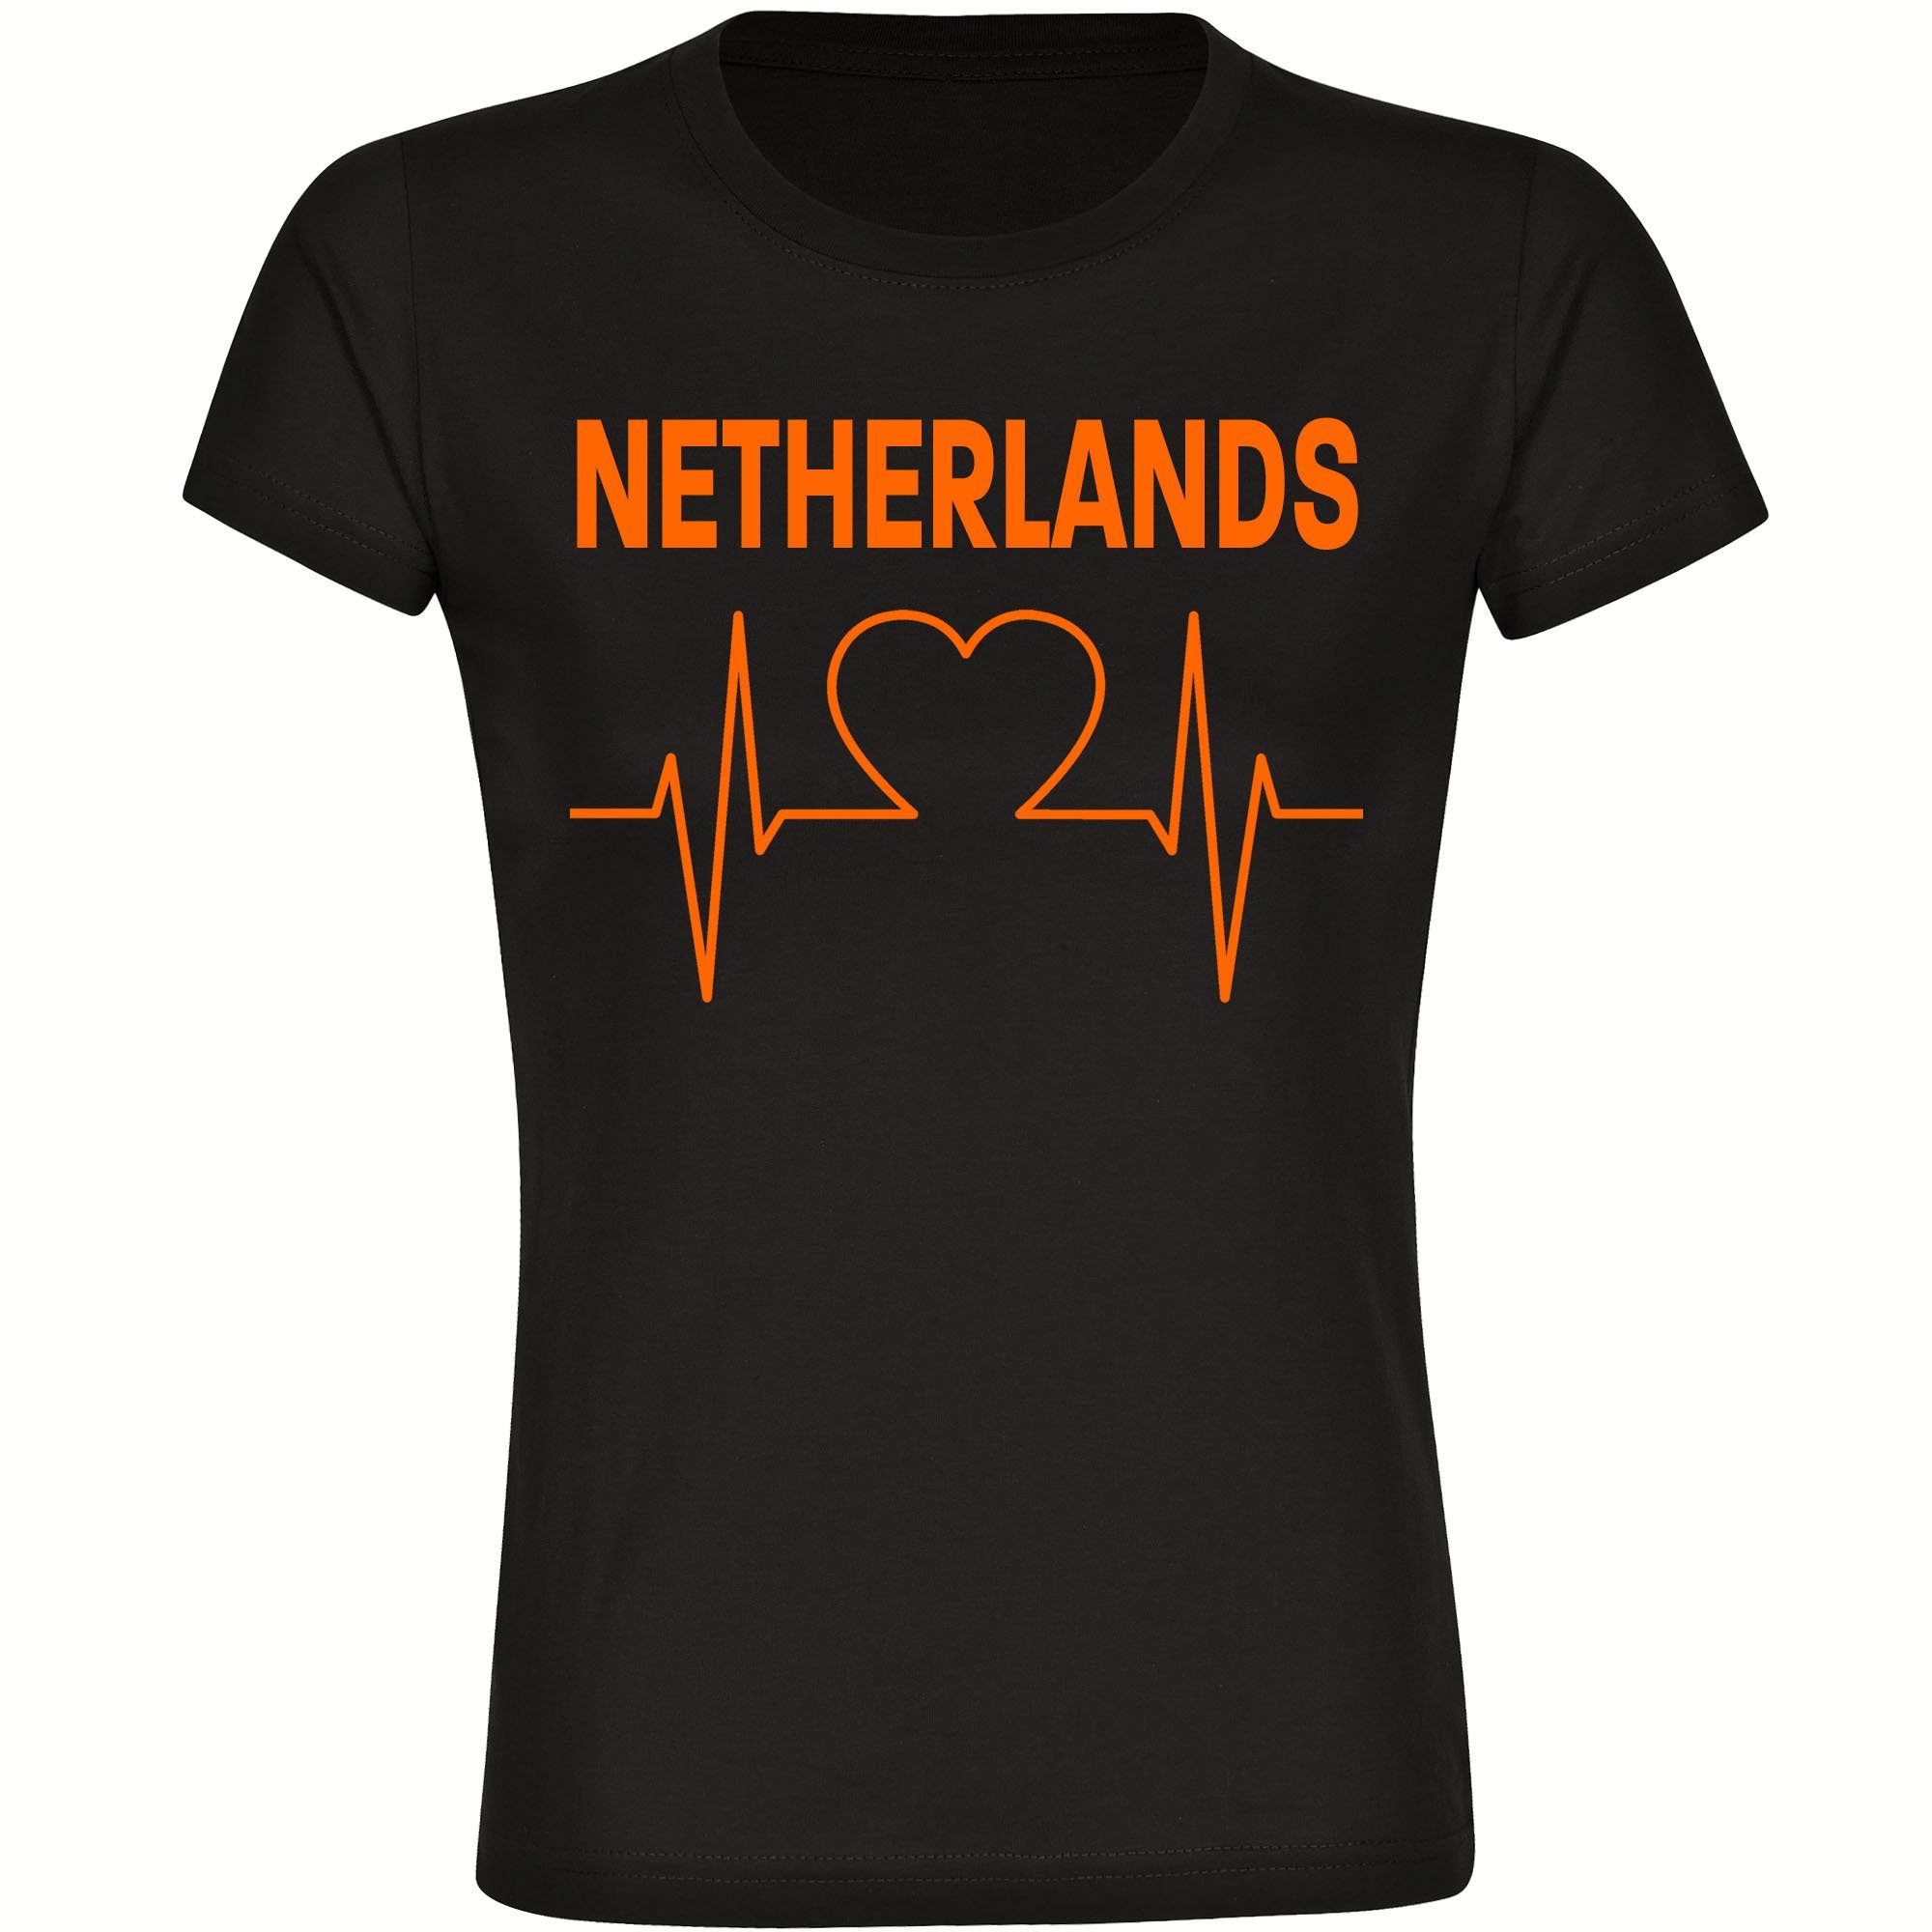 multifanshop T-Shirt Damen Netherlands - Herzschlag - Frauen